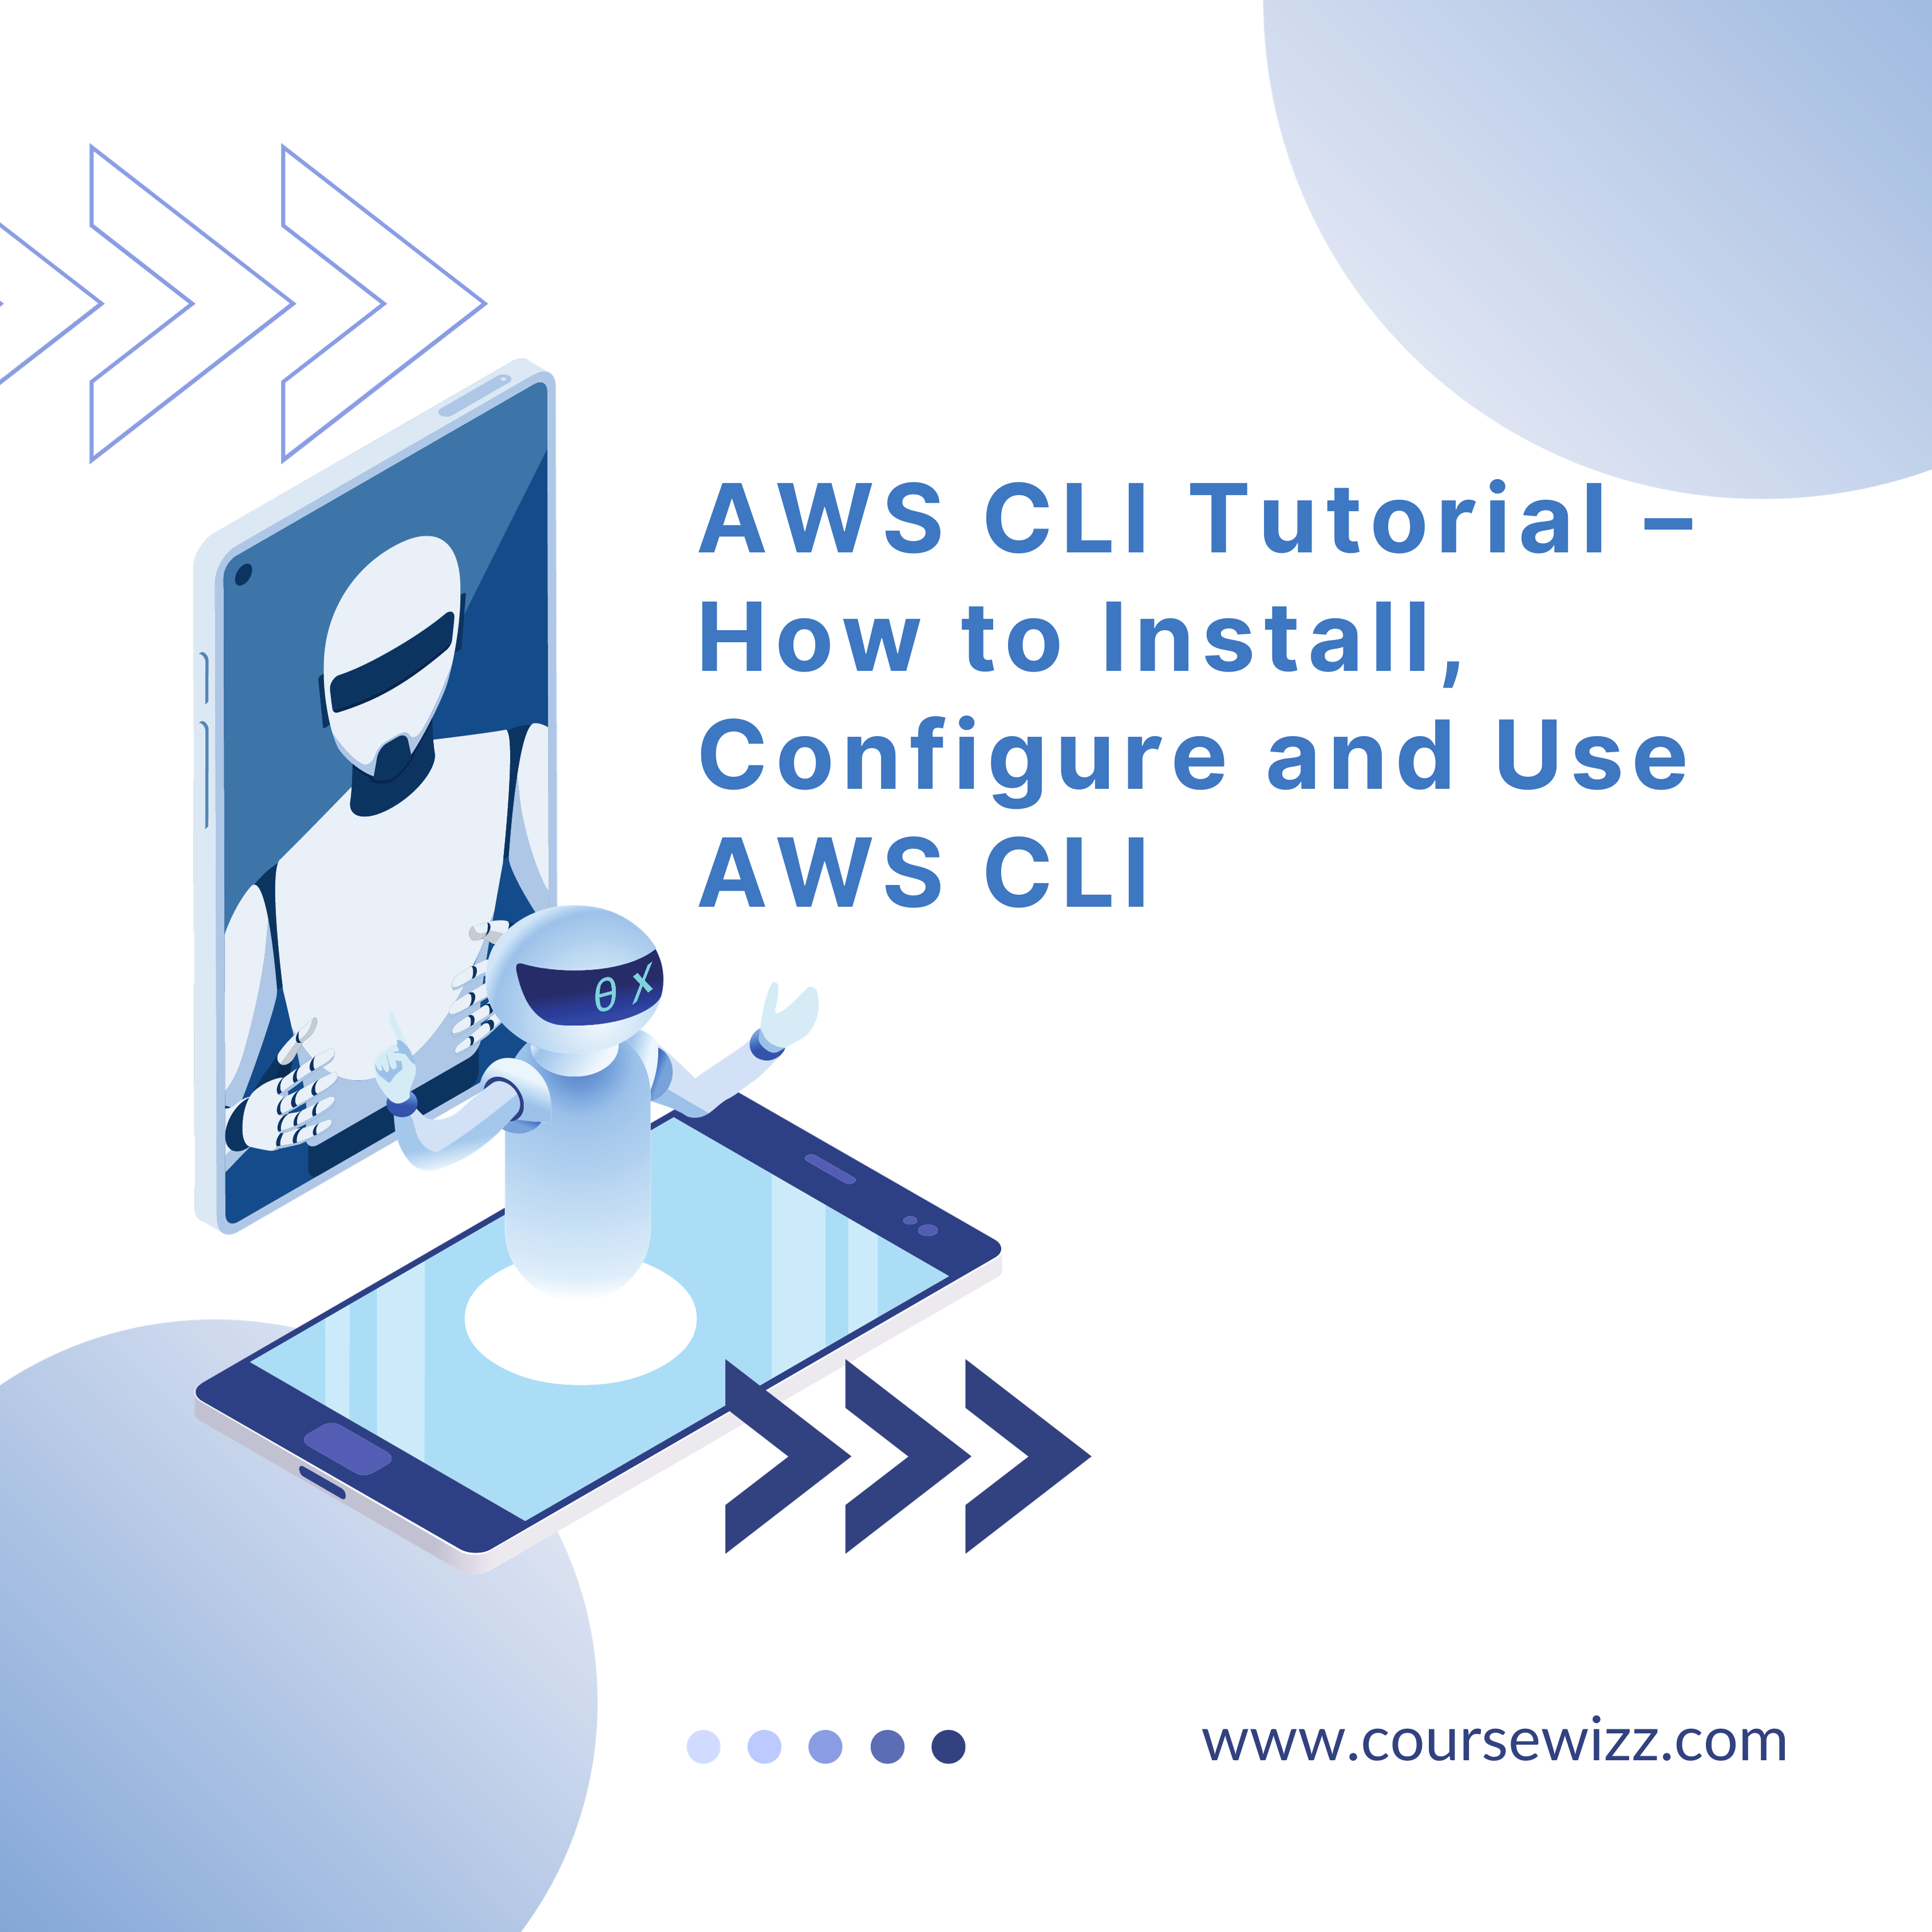 AWS CLI Tutorial - How to Install, Configure and Use AWS CLI